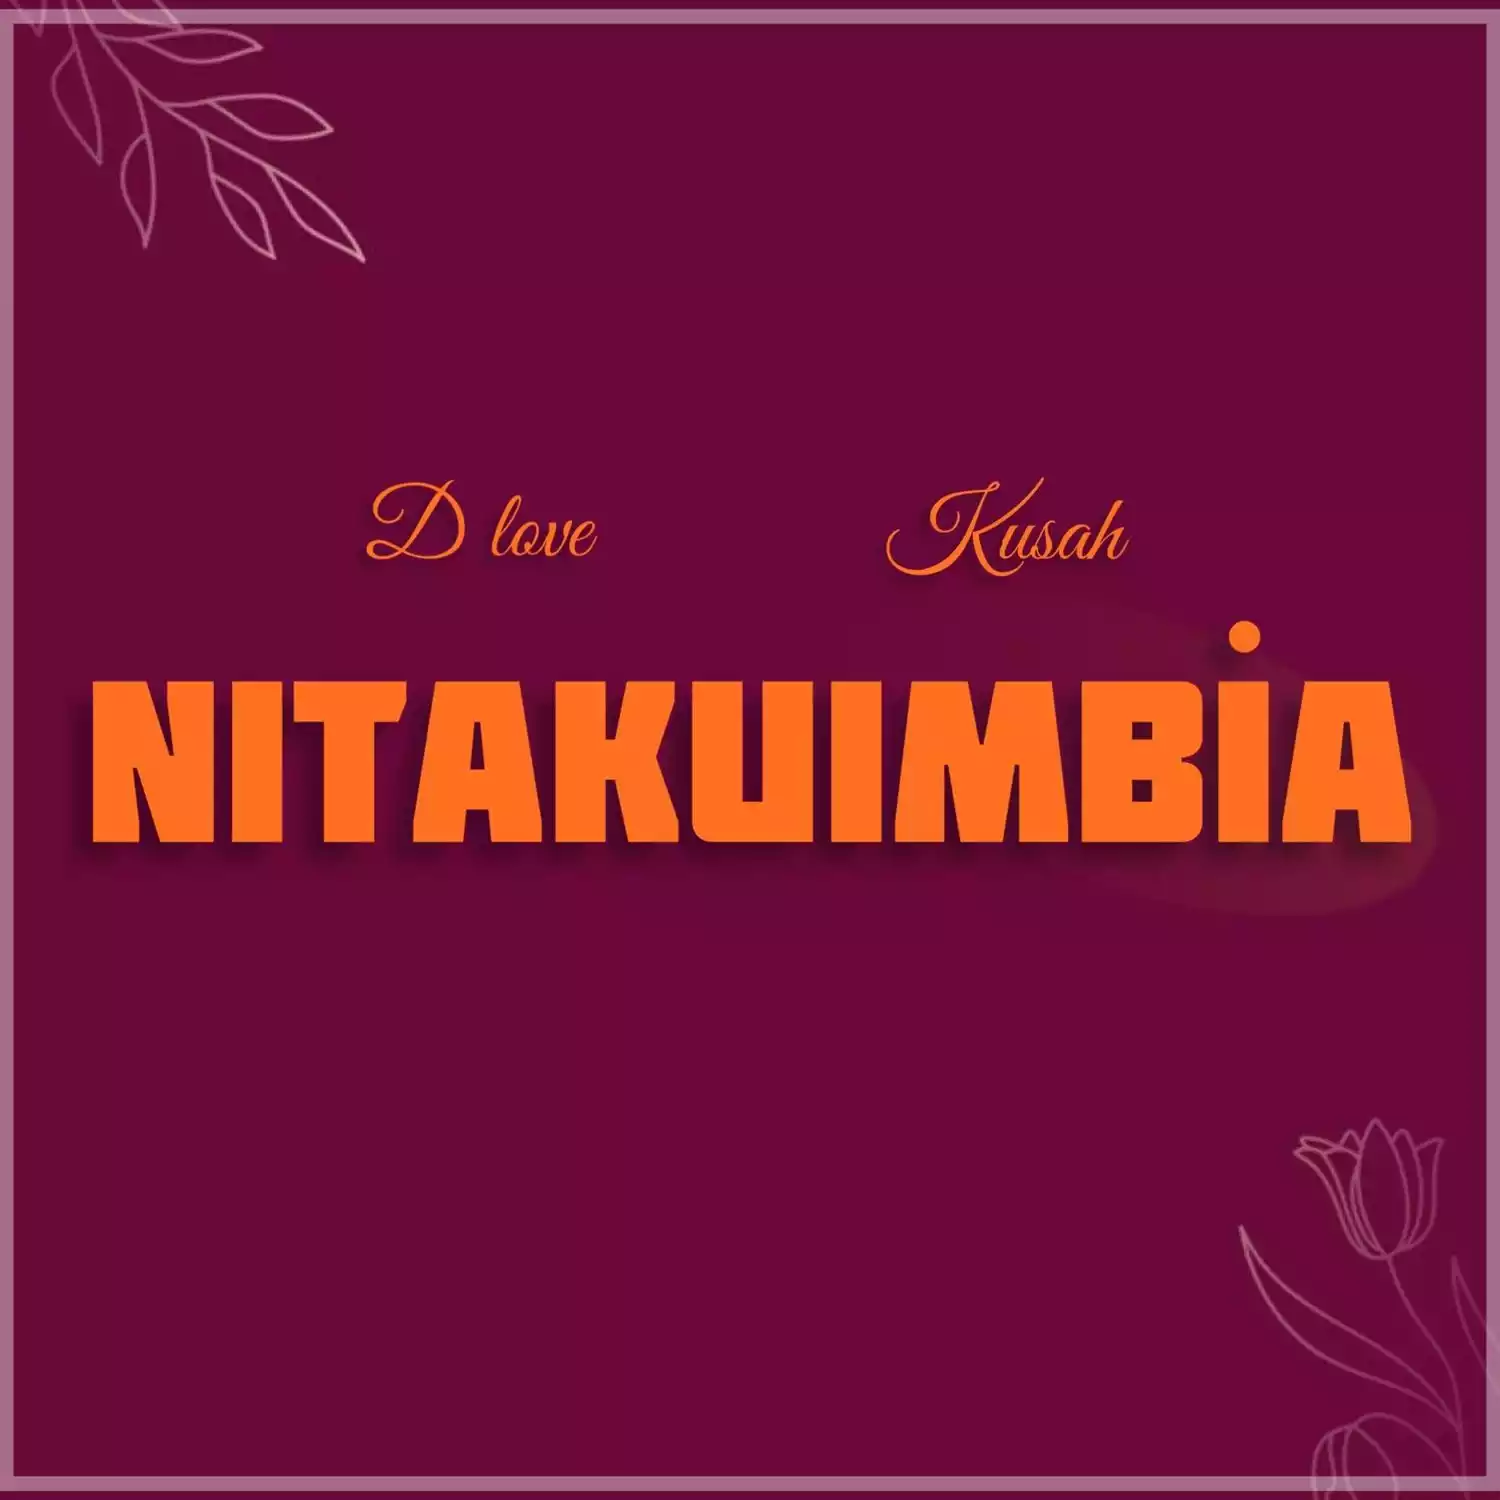 D Love - Nitakuimbia Mp3 Download